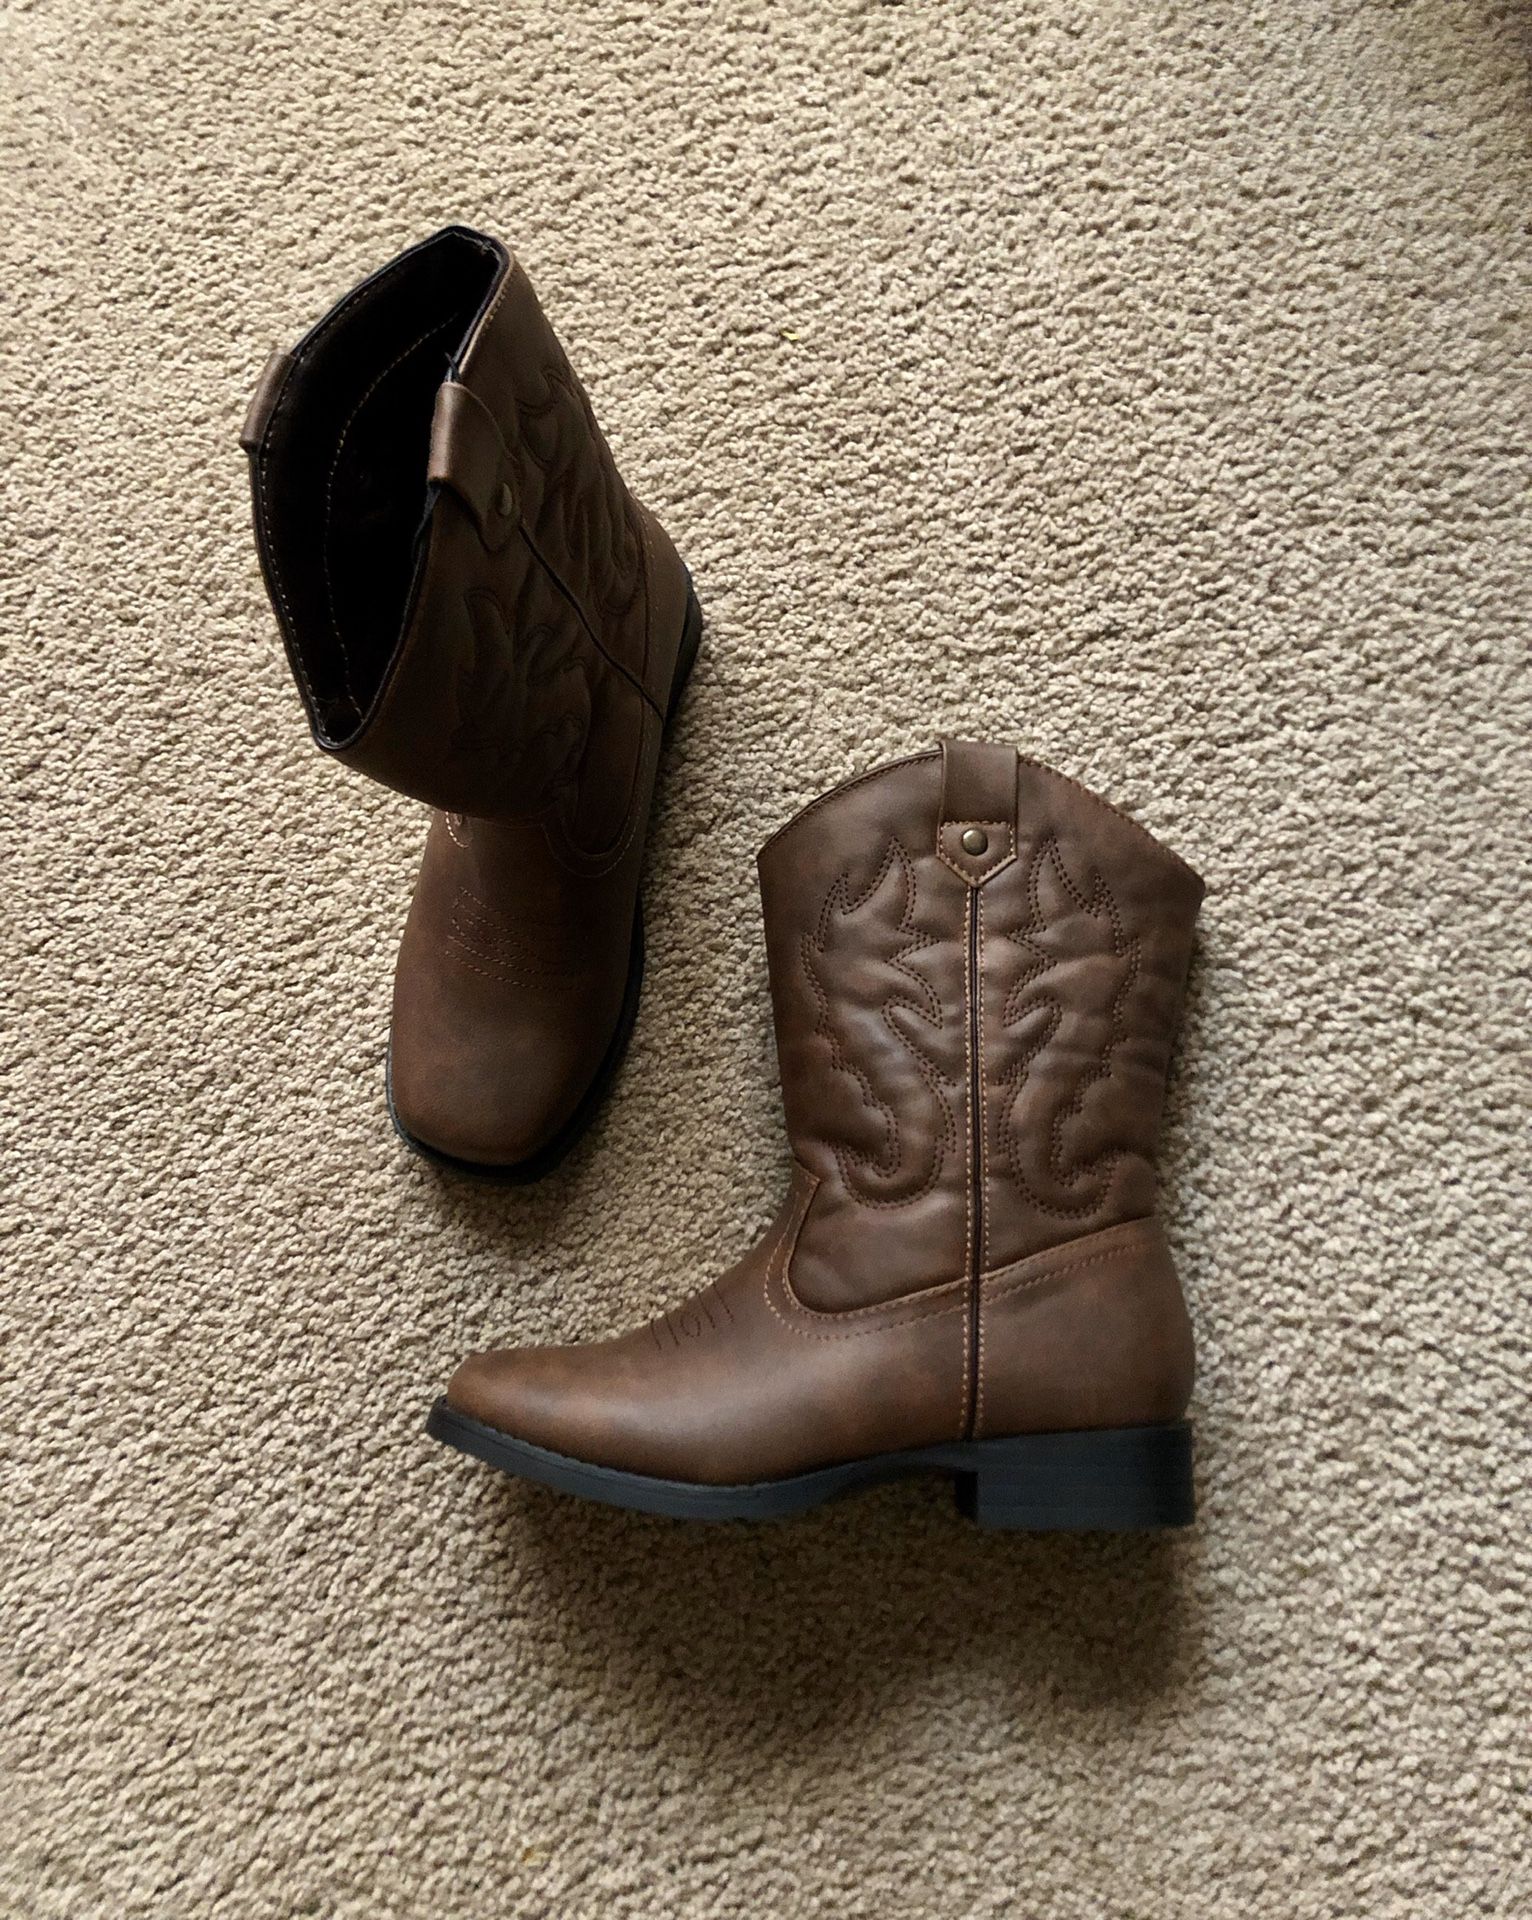 Cowboy boots big kids size 4 NEW